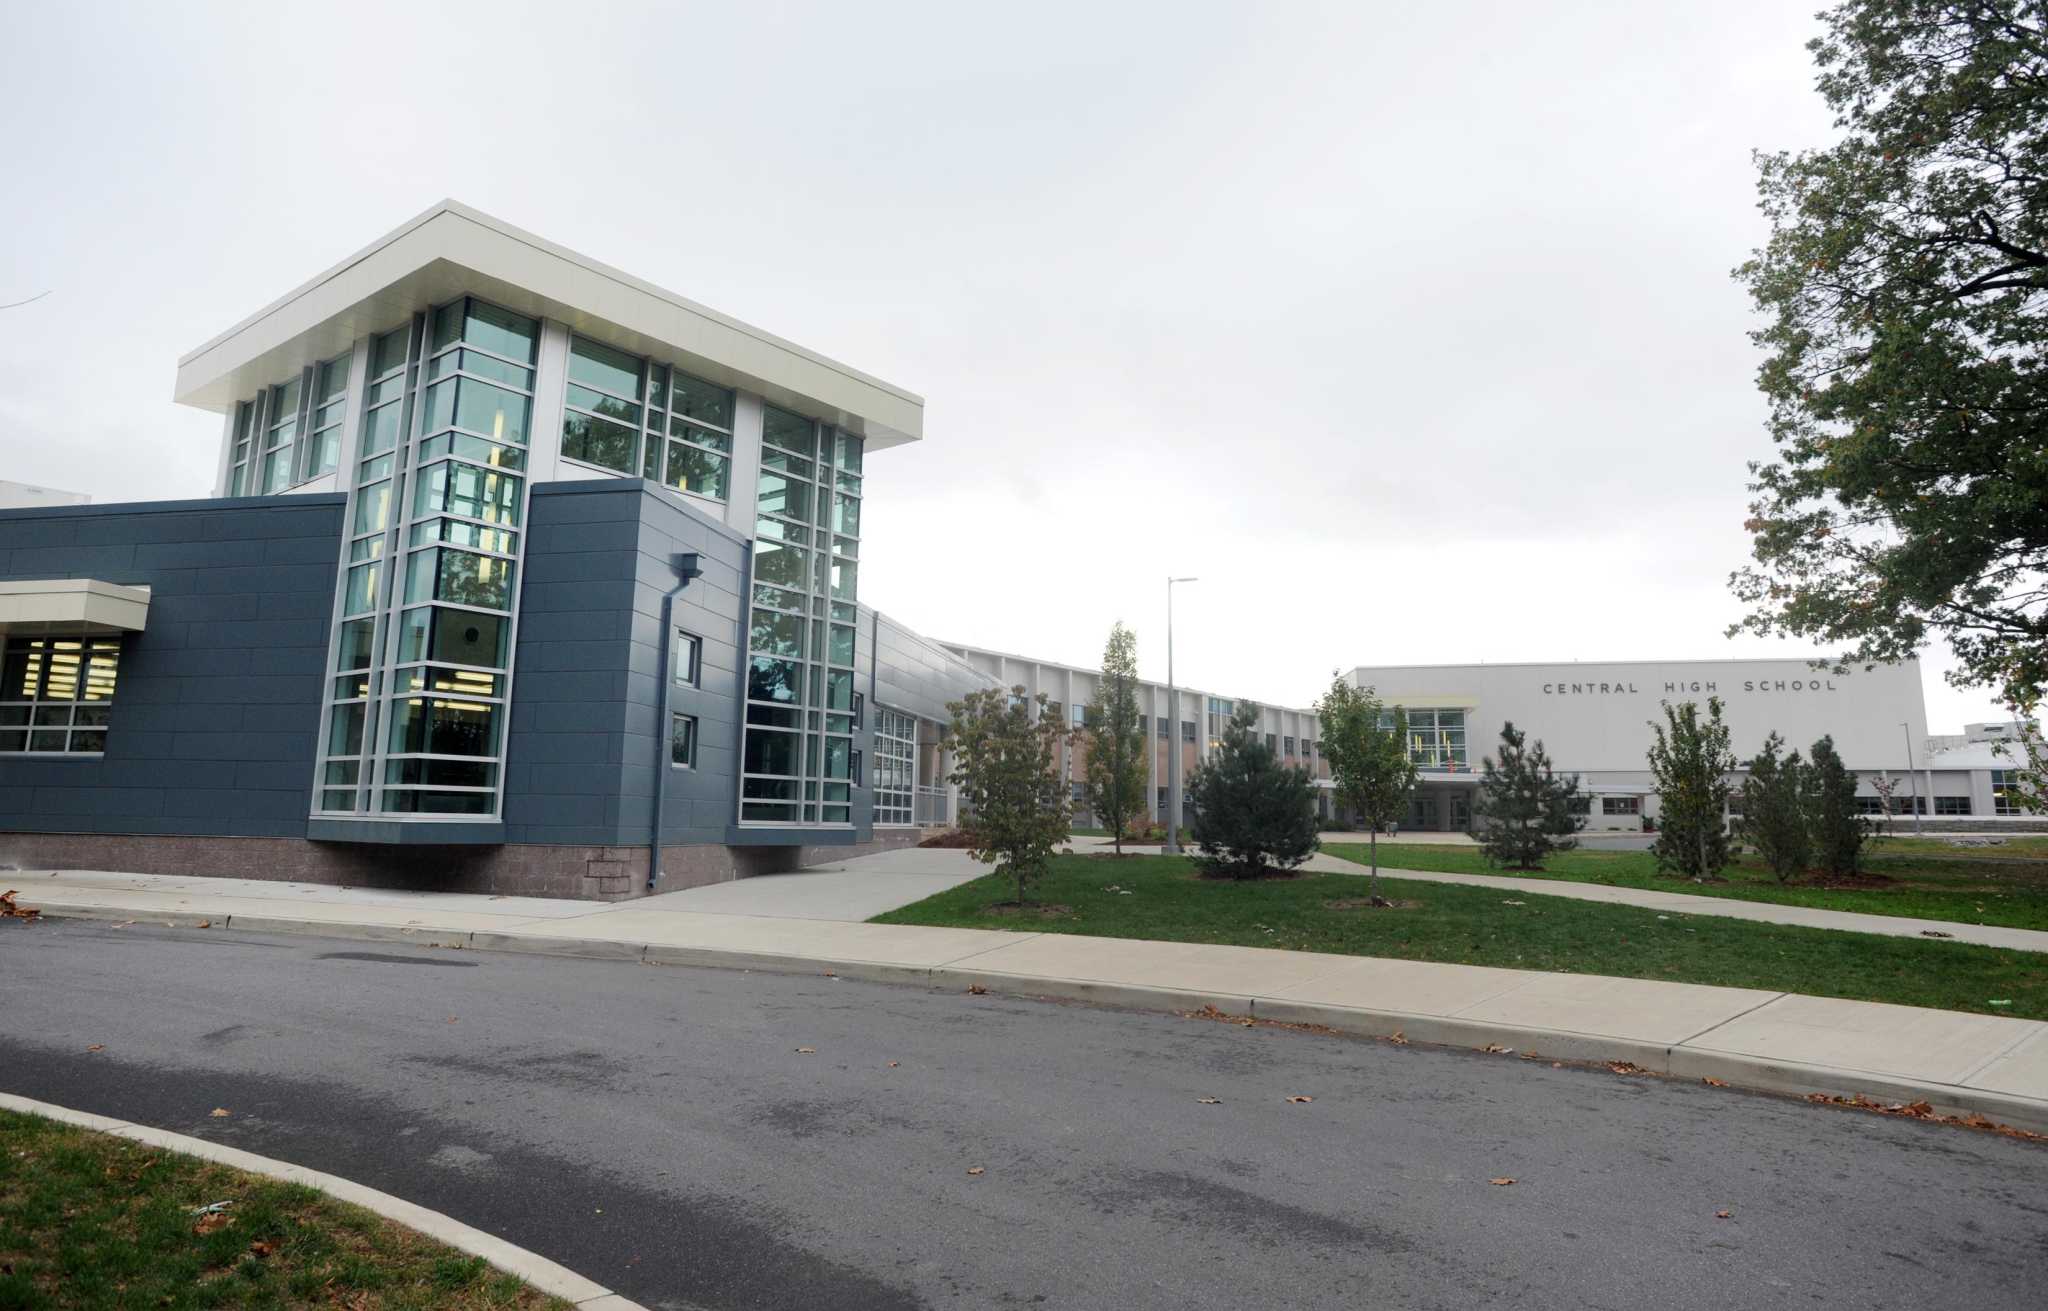 Social media threat prompts police presence at Bridgeport school